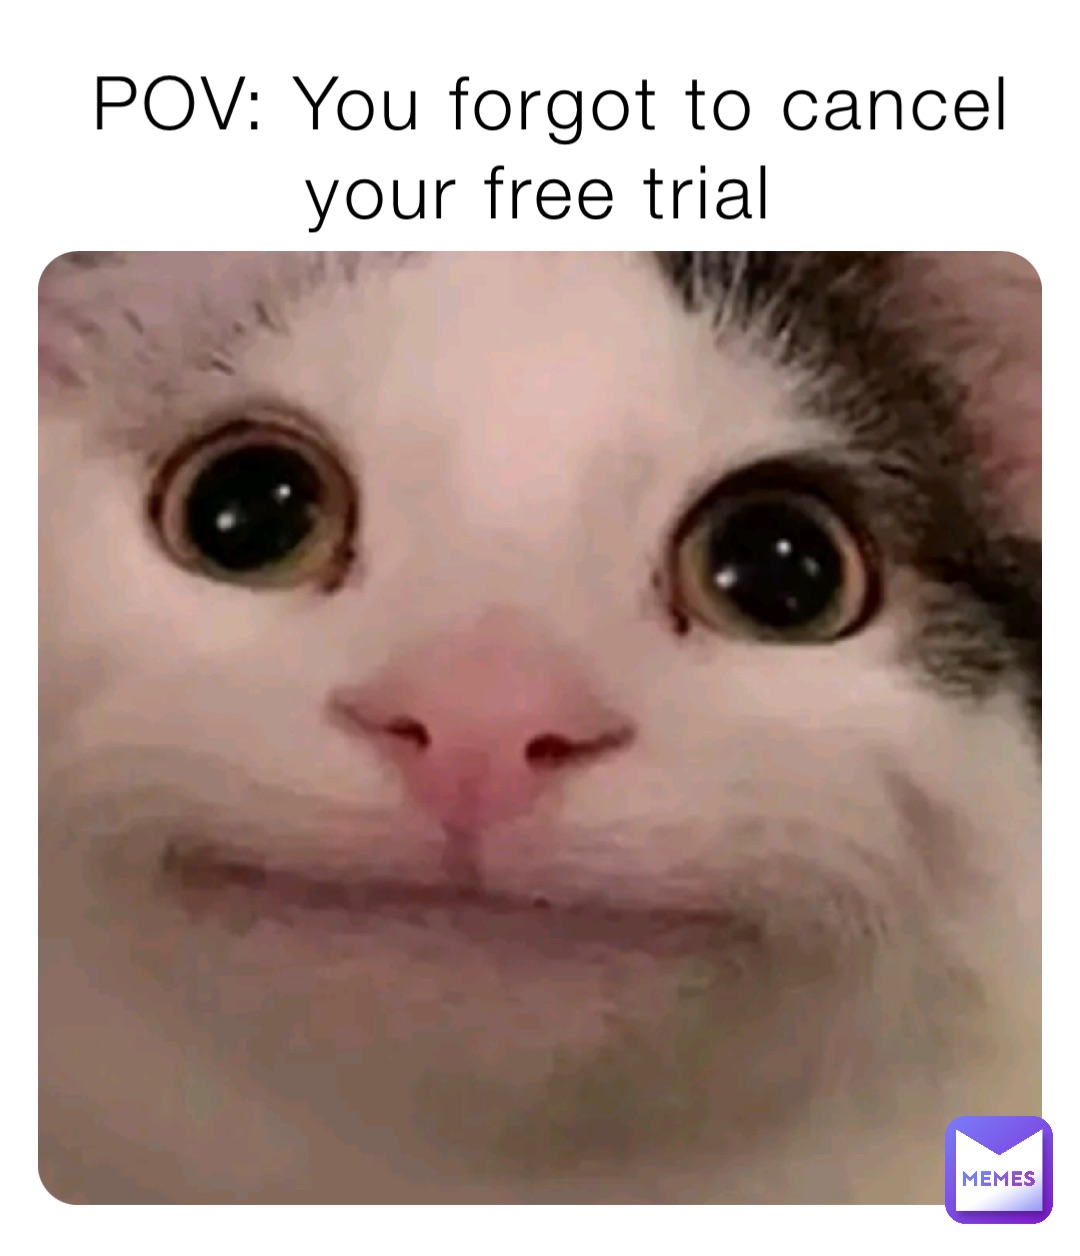 POV: You forgot to cancel your free trial